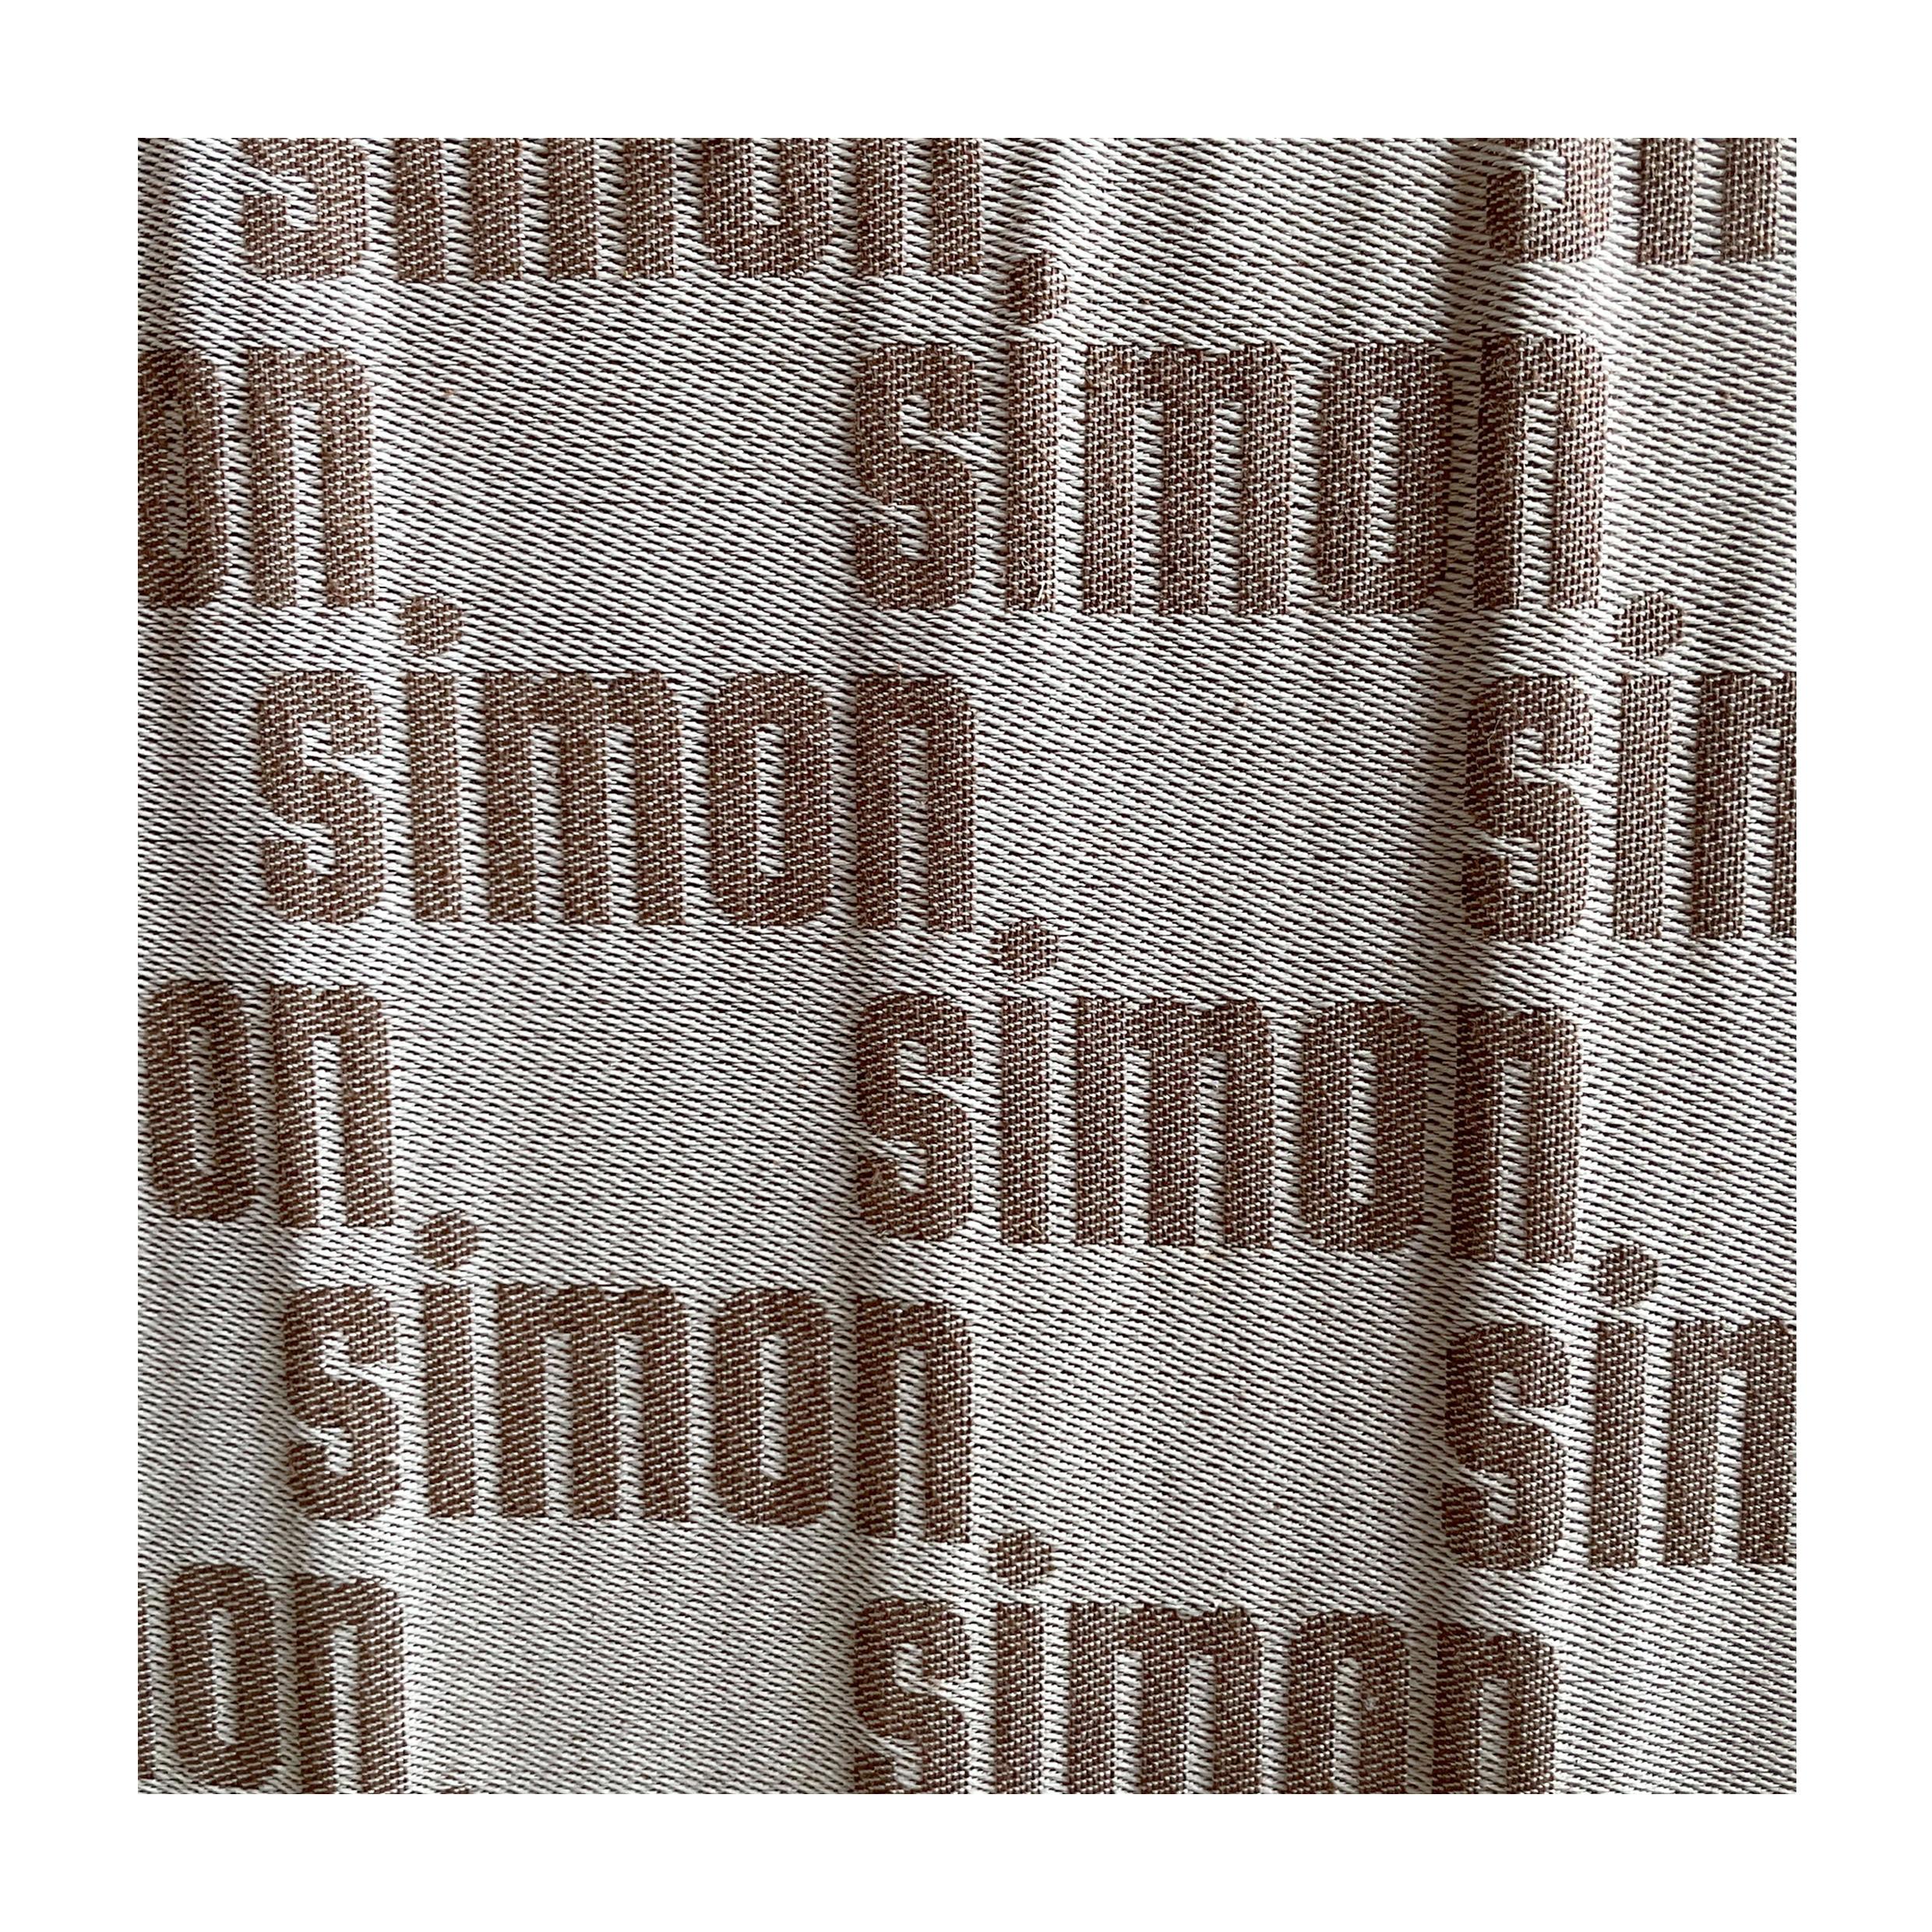 Late 20th Century Studio Simon Minimalist Black Leather Three-Seater “Simone” Sofa, Italy, 1975 For Sale